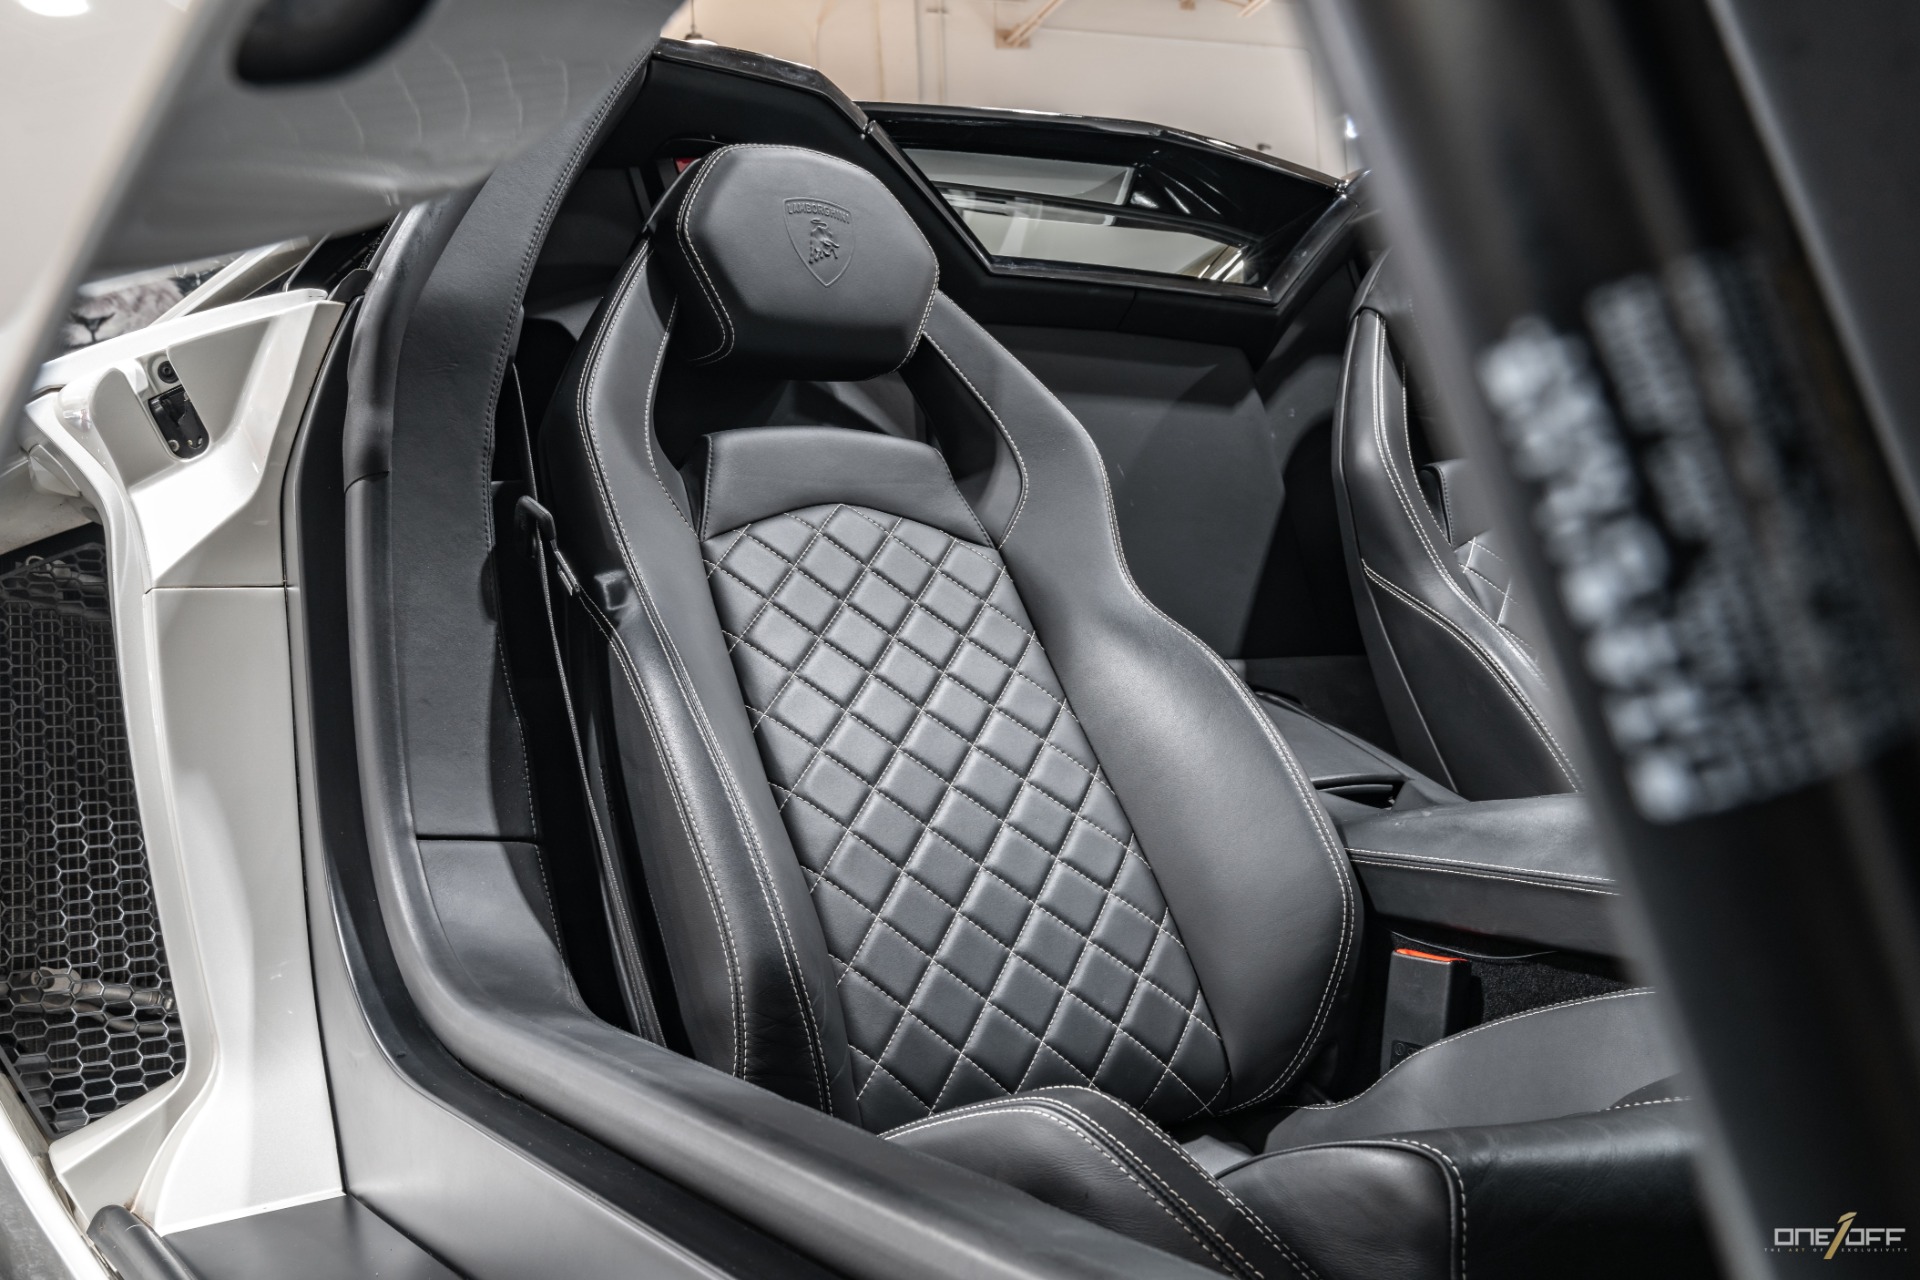 Lamborghini Aventador (carbon) - pre-order office chair from a car seat